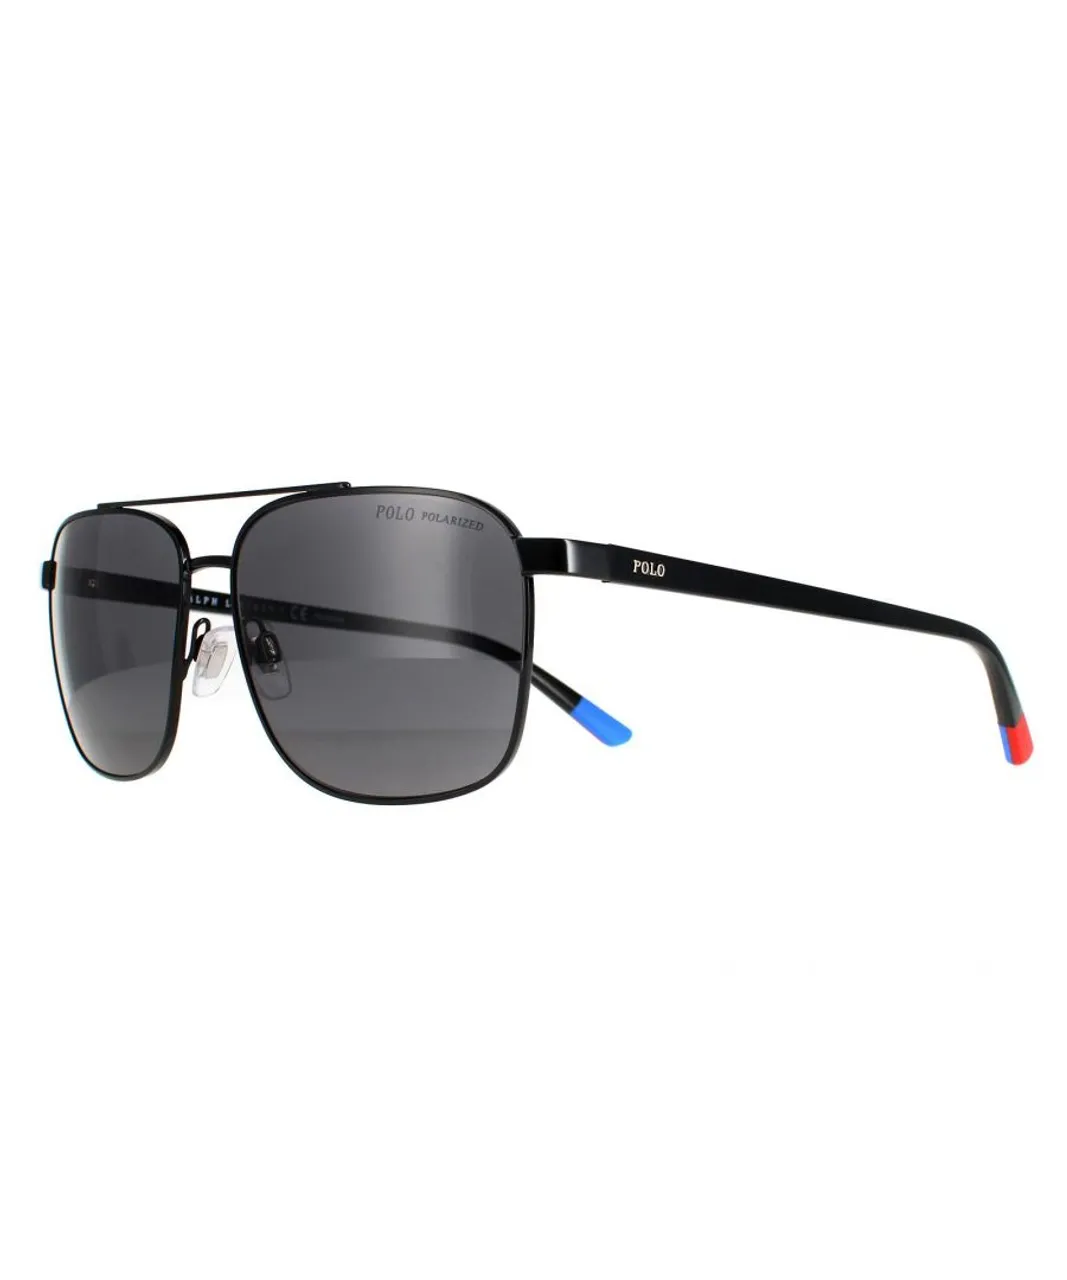 Polo Ralph Lauren Aviator Mens Shiny Black Grey Polarized Sunglasses - One